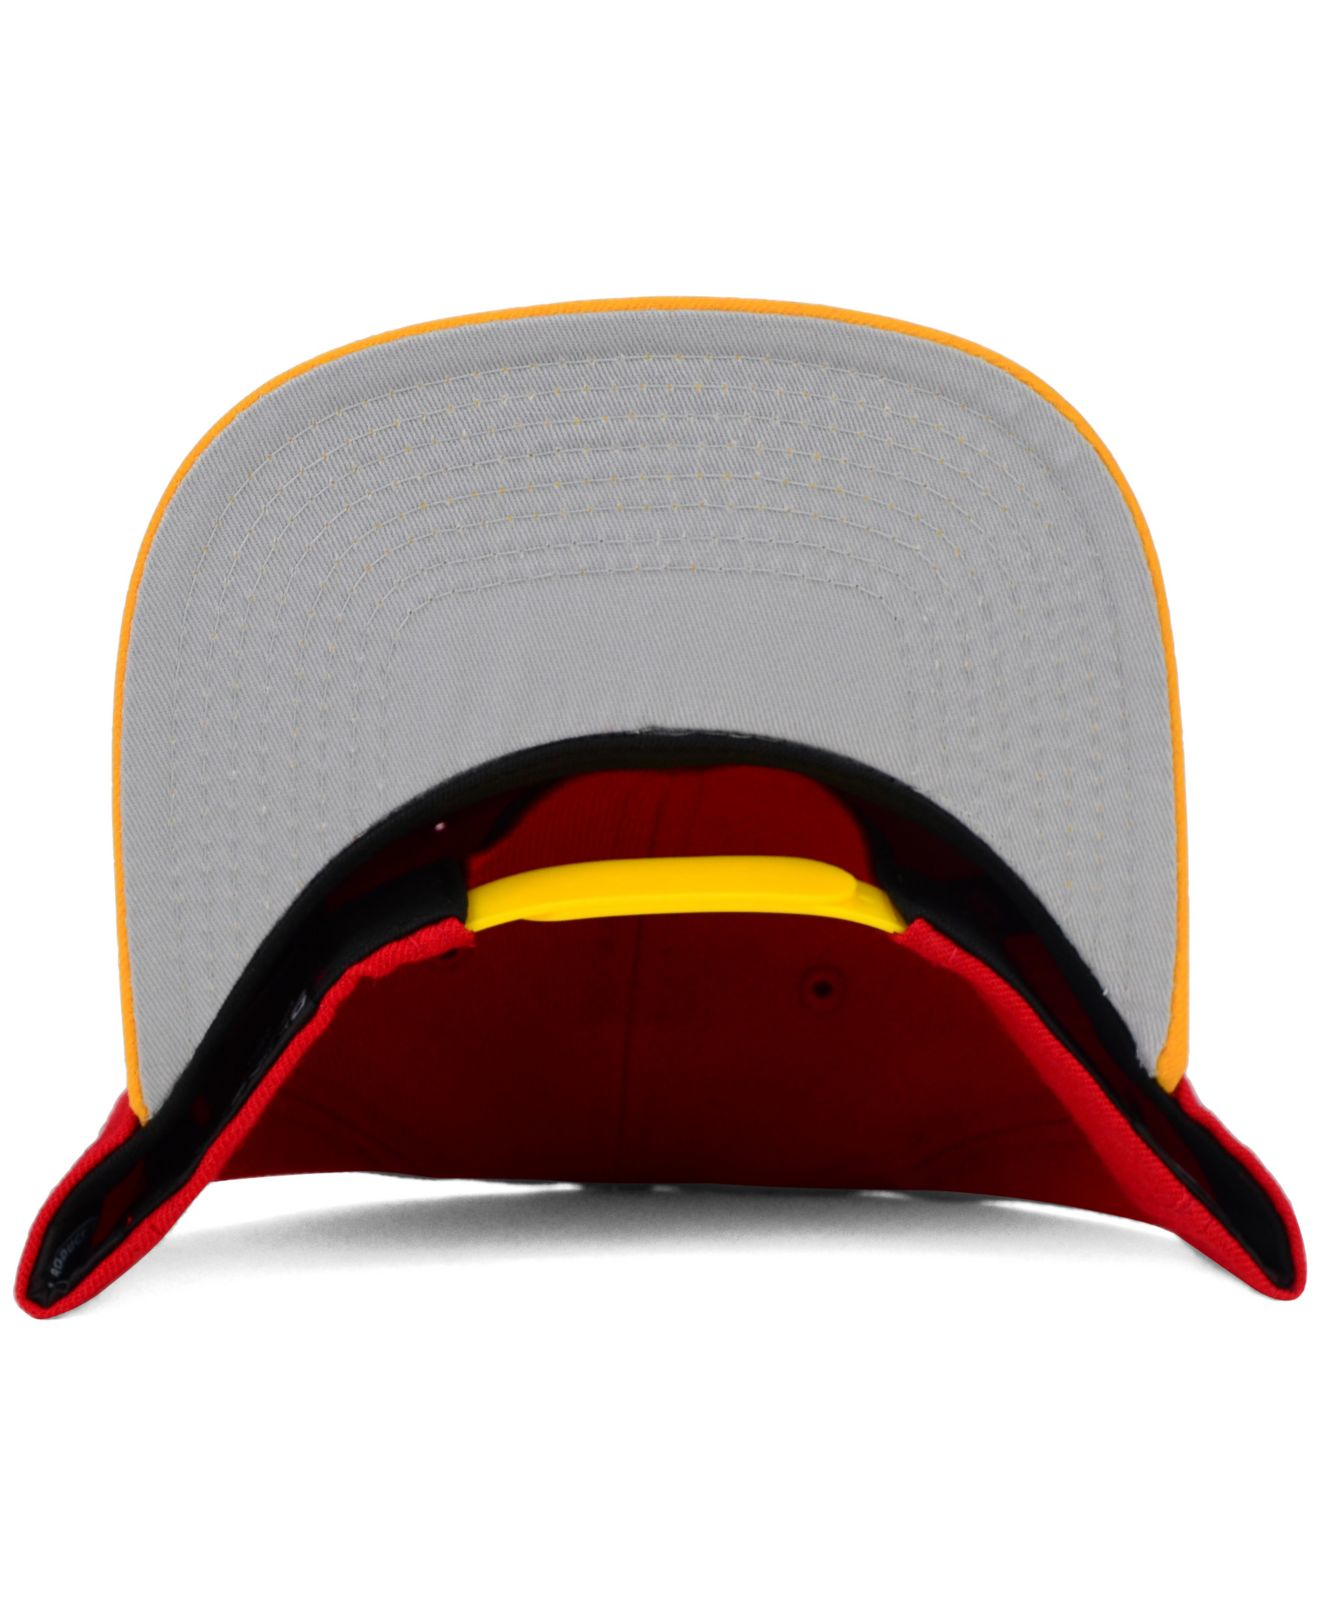 Calgary Flames Baseball Hat Cap by NewEra 9FIFTY Snapback Red and Black